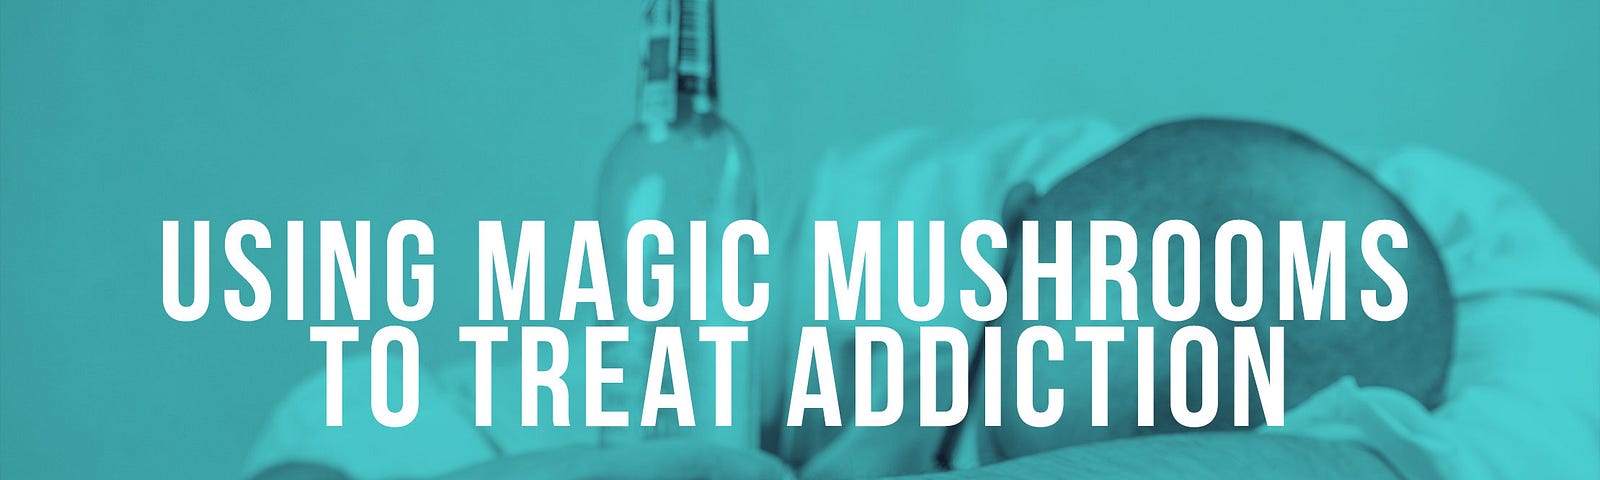 using magic mushrooms to treat addiction by Blue Goba